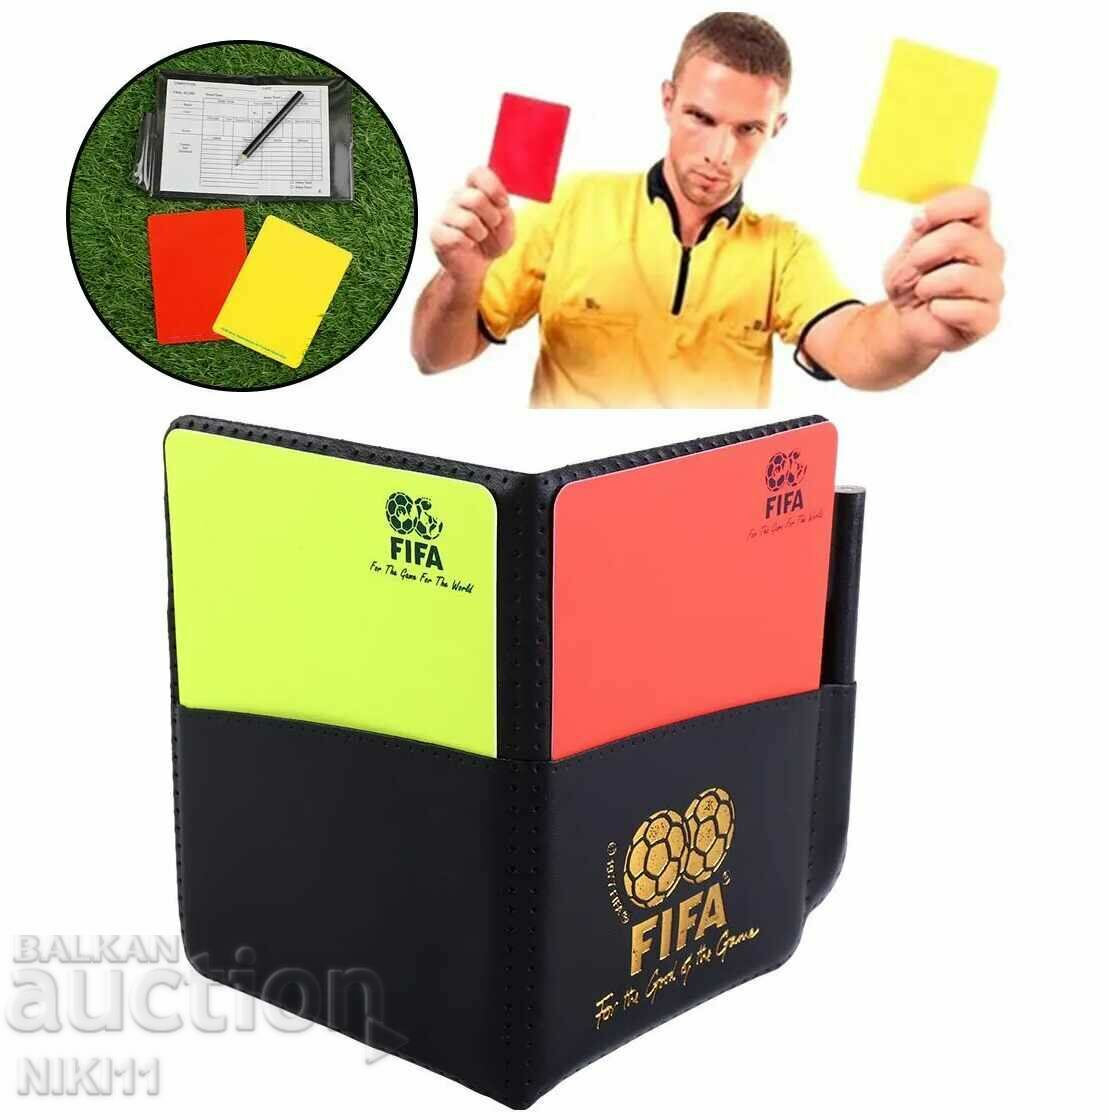 Cartonașe pentru arbitri de fotbal, carnețel cartonaș galben roșu fotbal